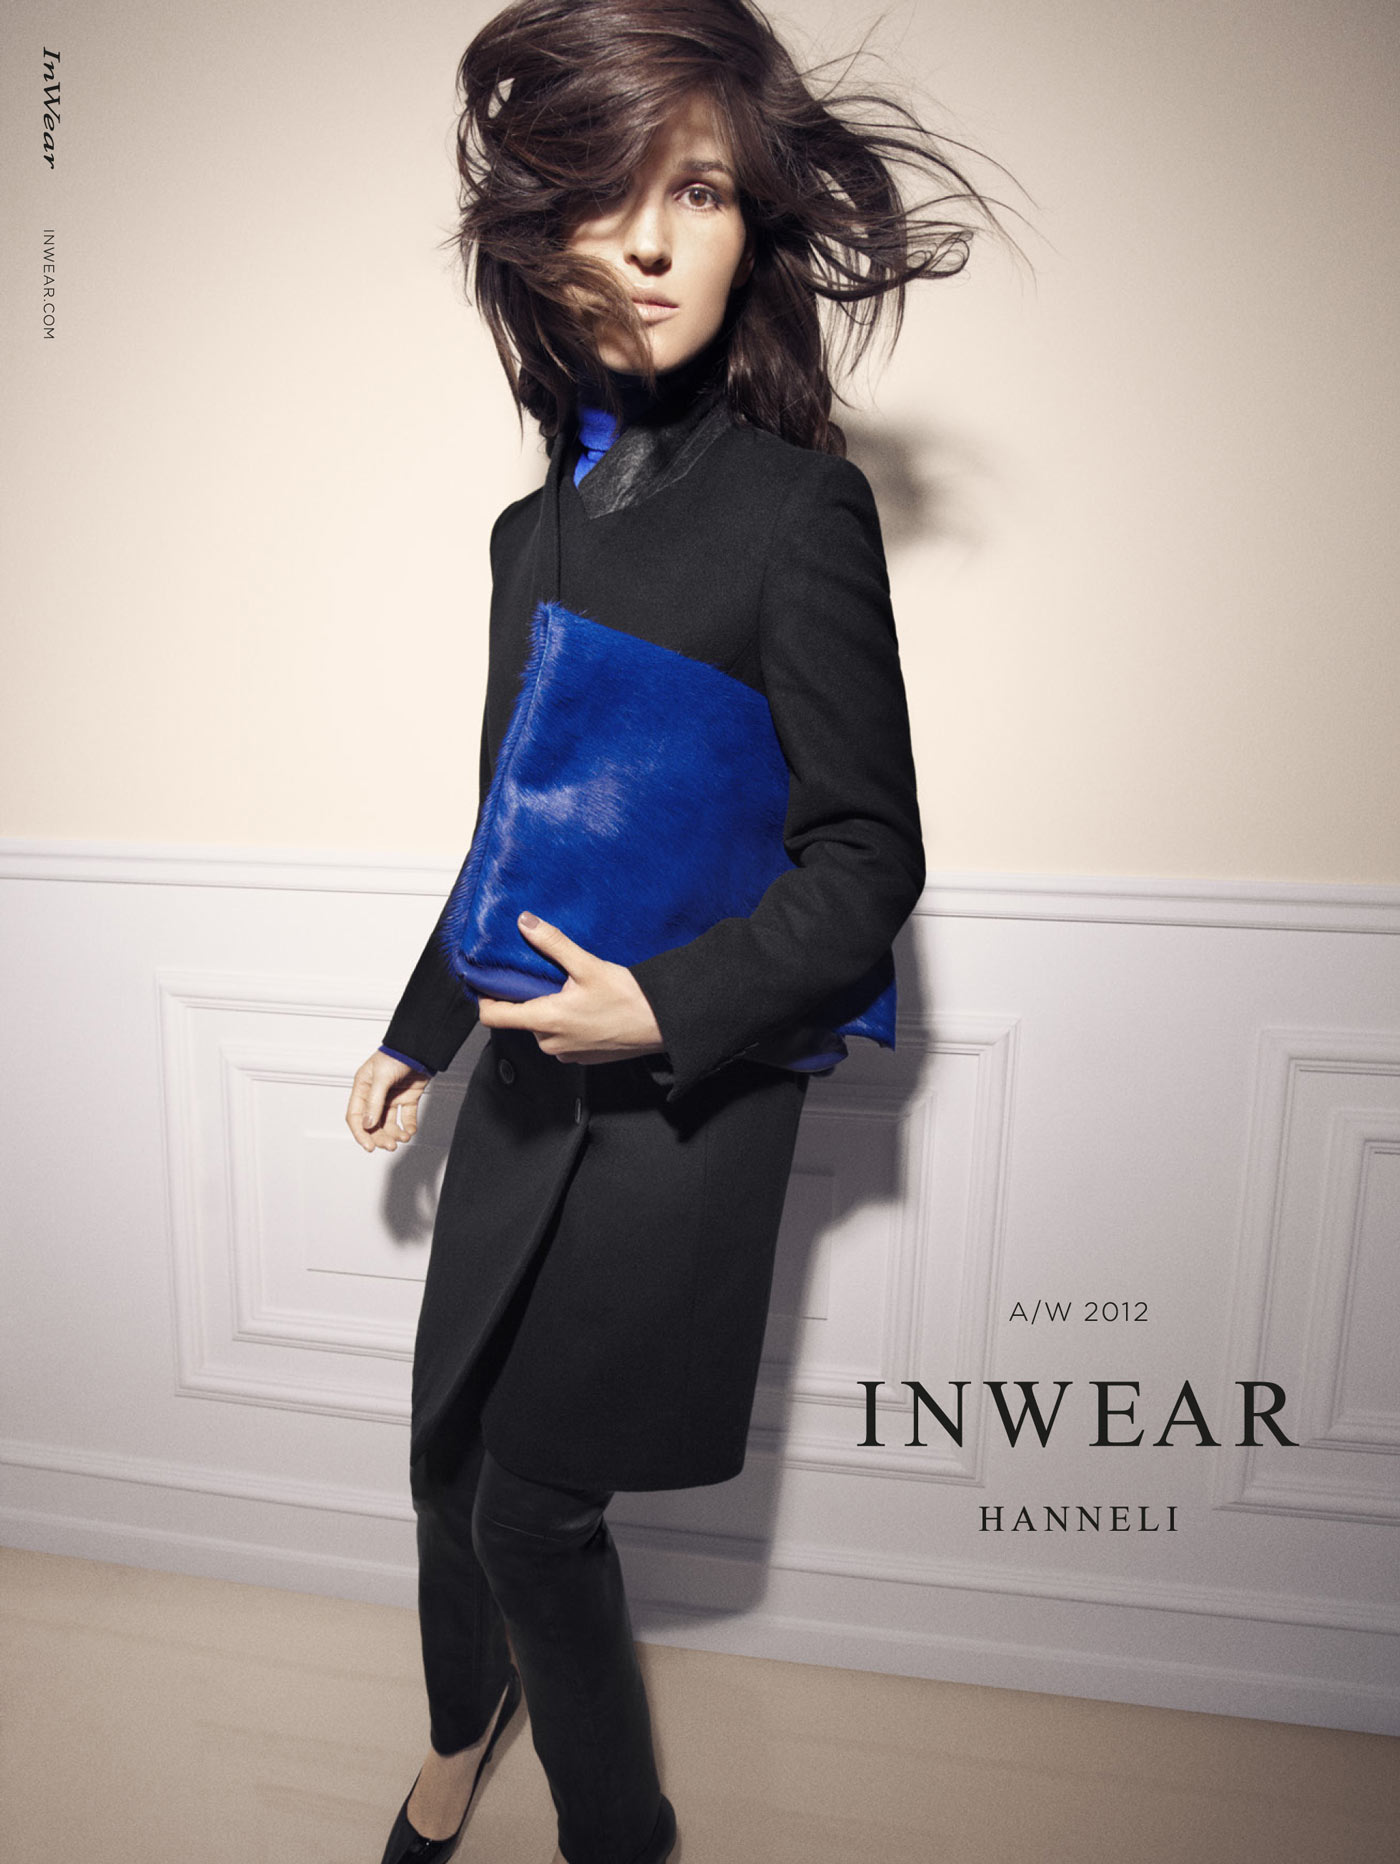 Inwear – Campaign Autumn/Winter 2012